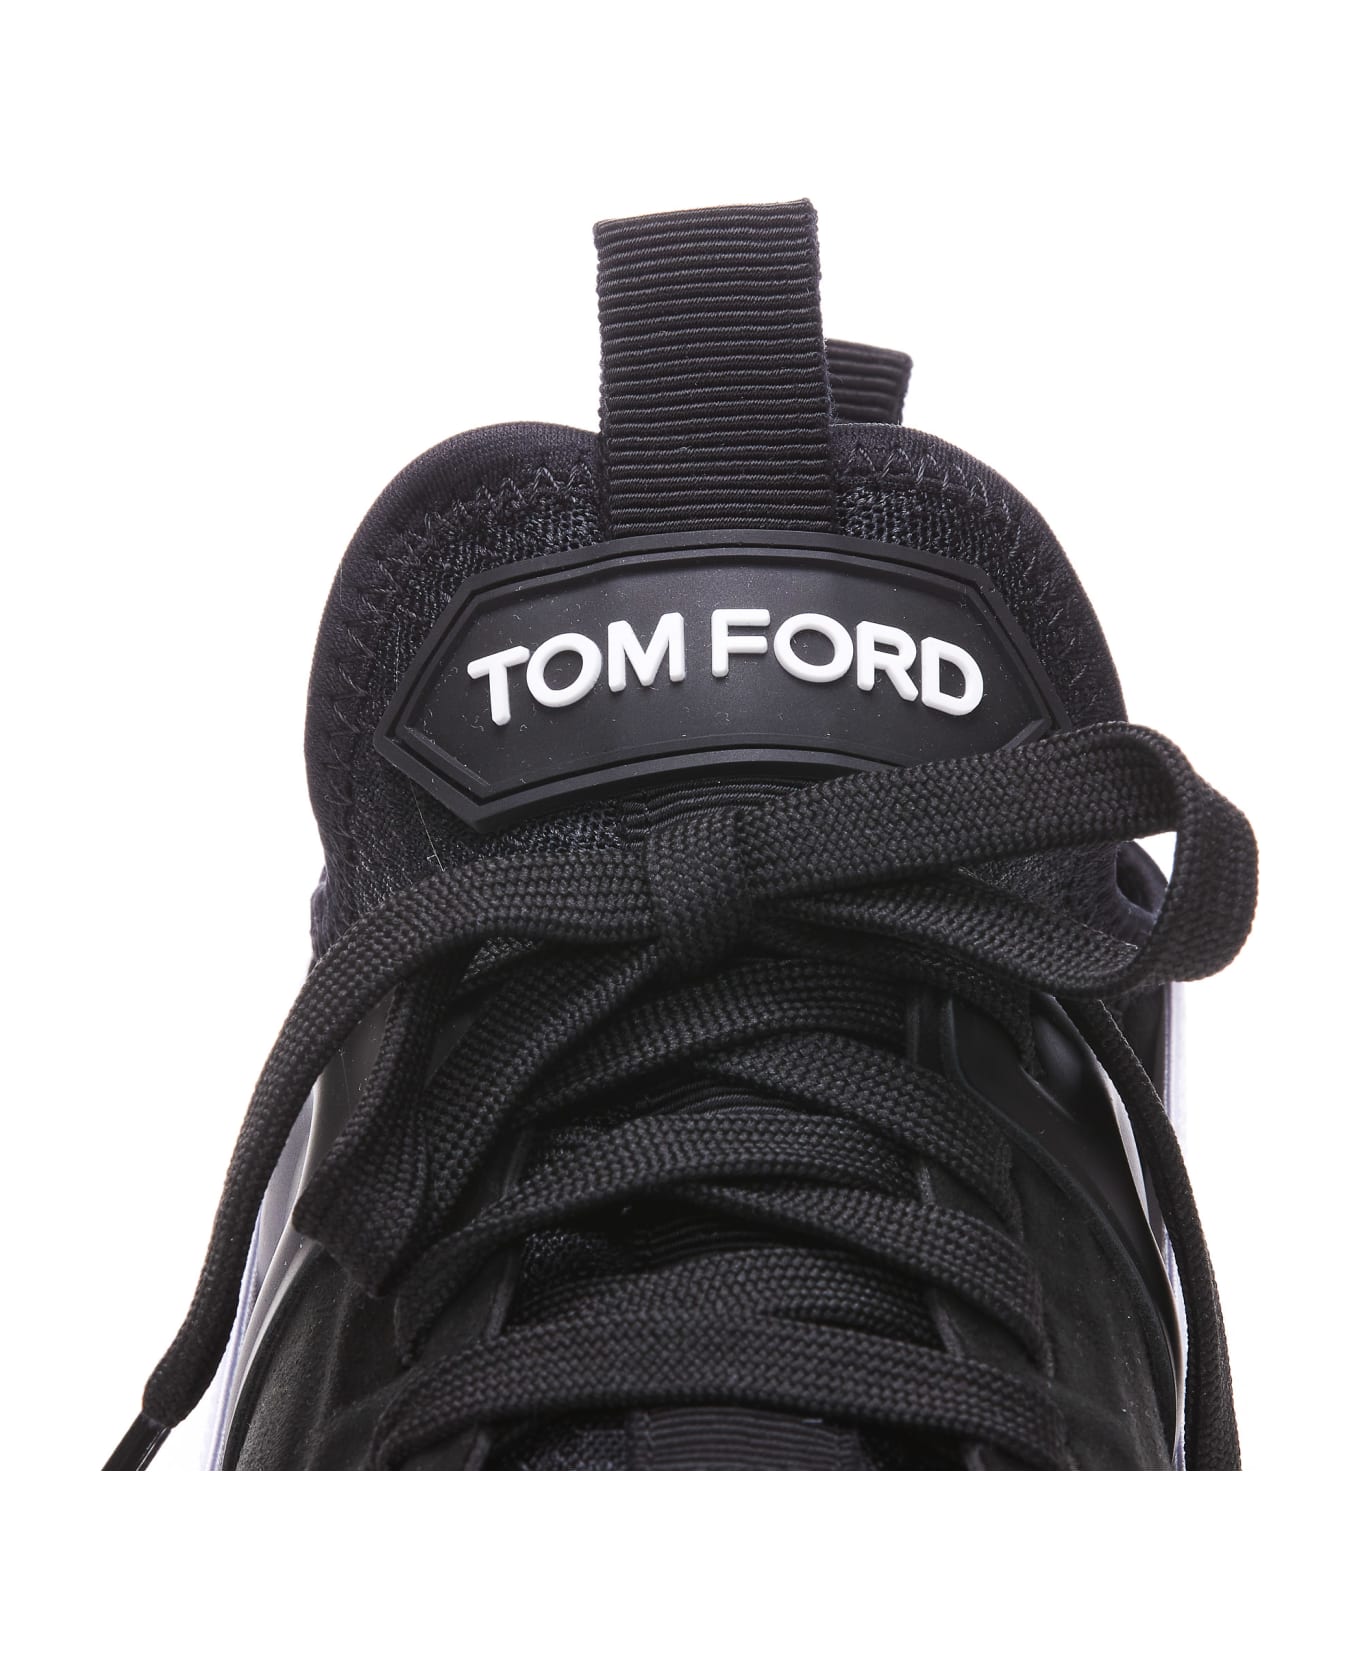 Tom Ford Jago Sneakers - Black